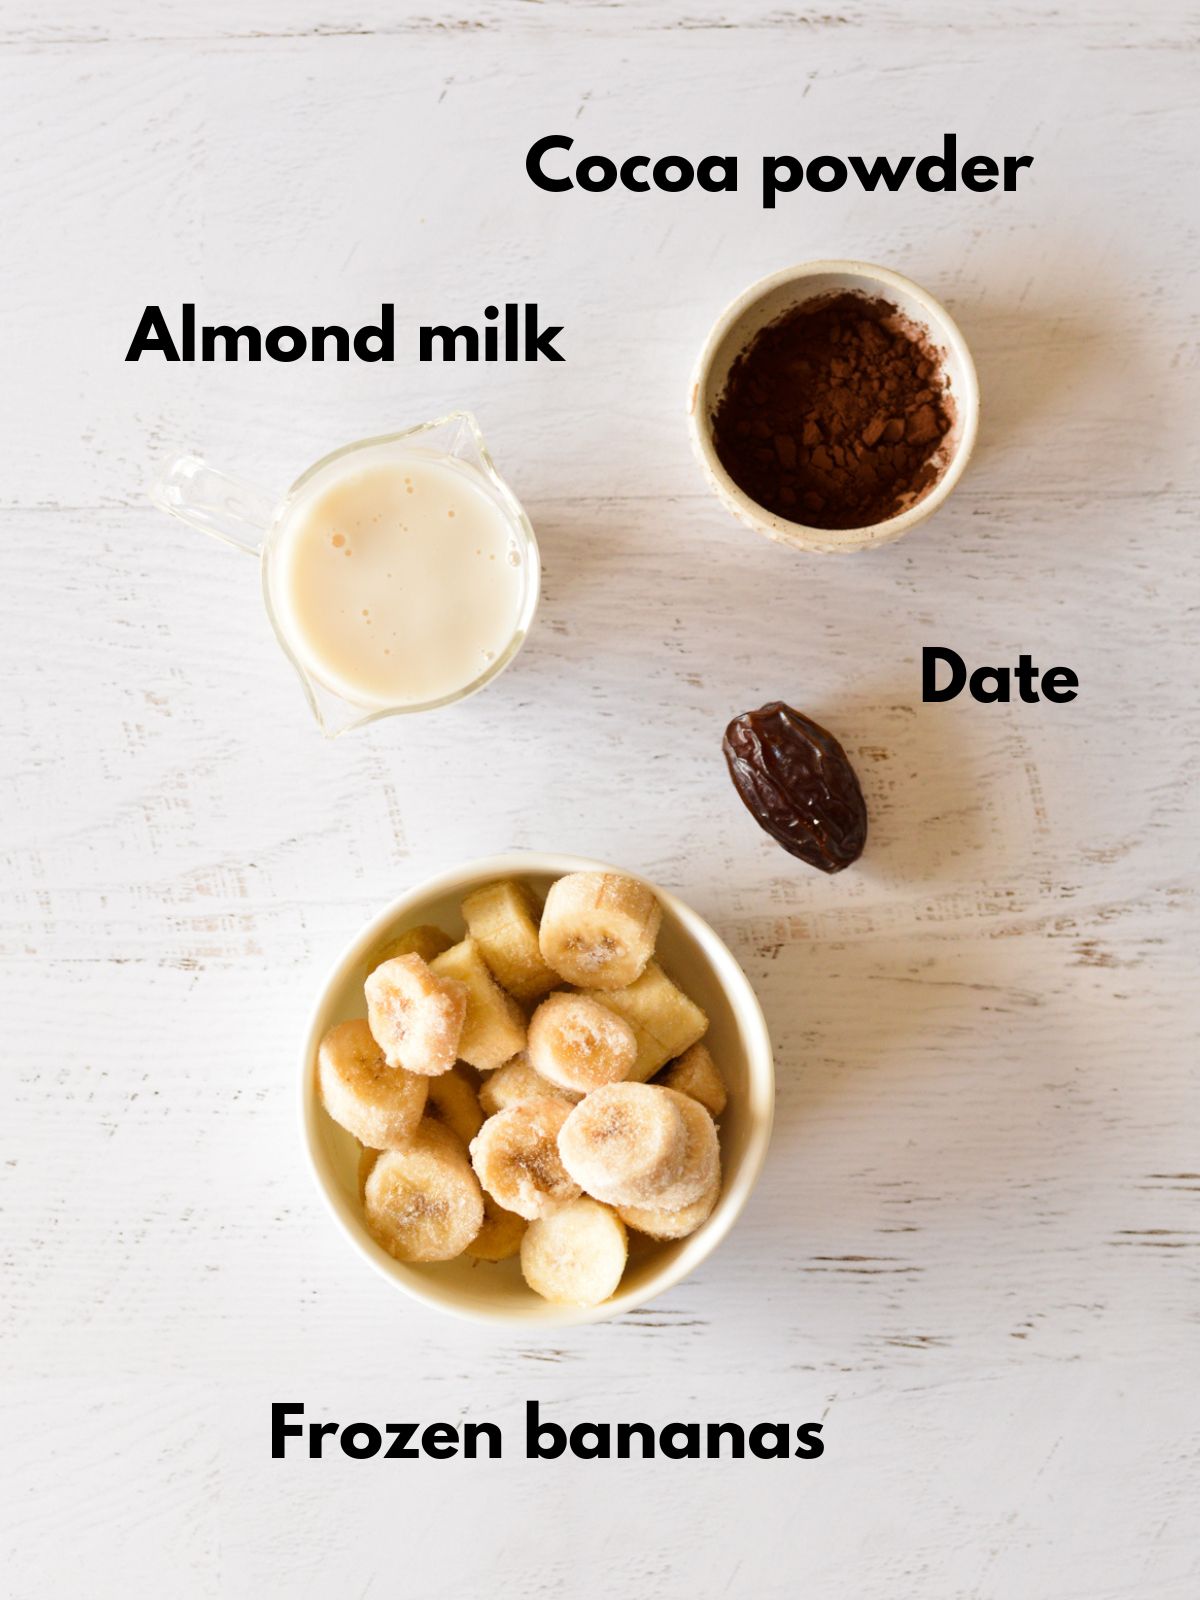 cocoa powder, almond milk, date, and bananas.